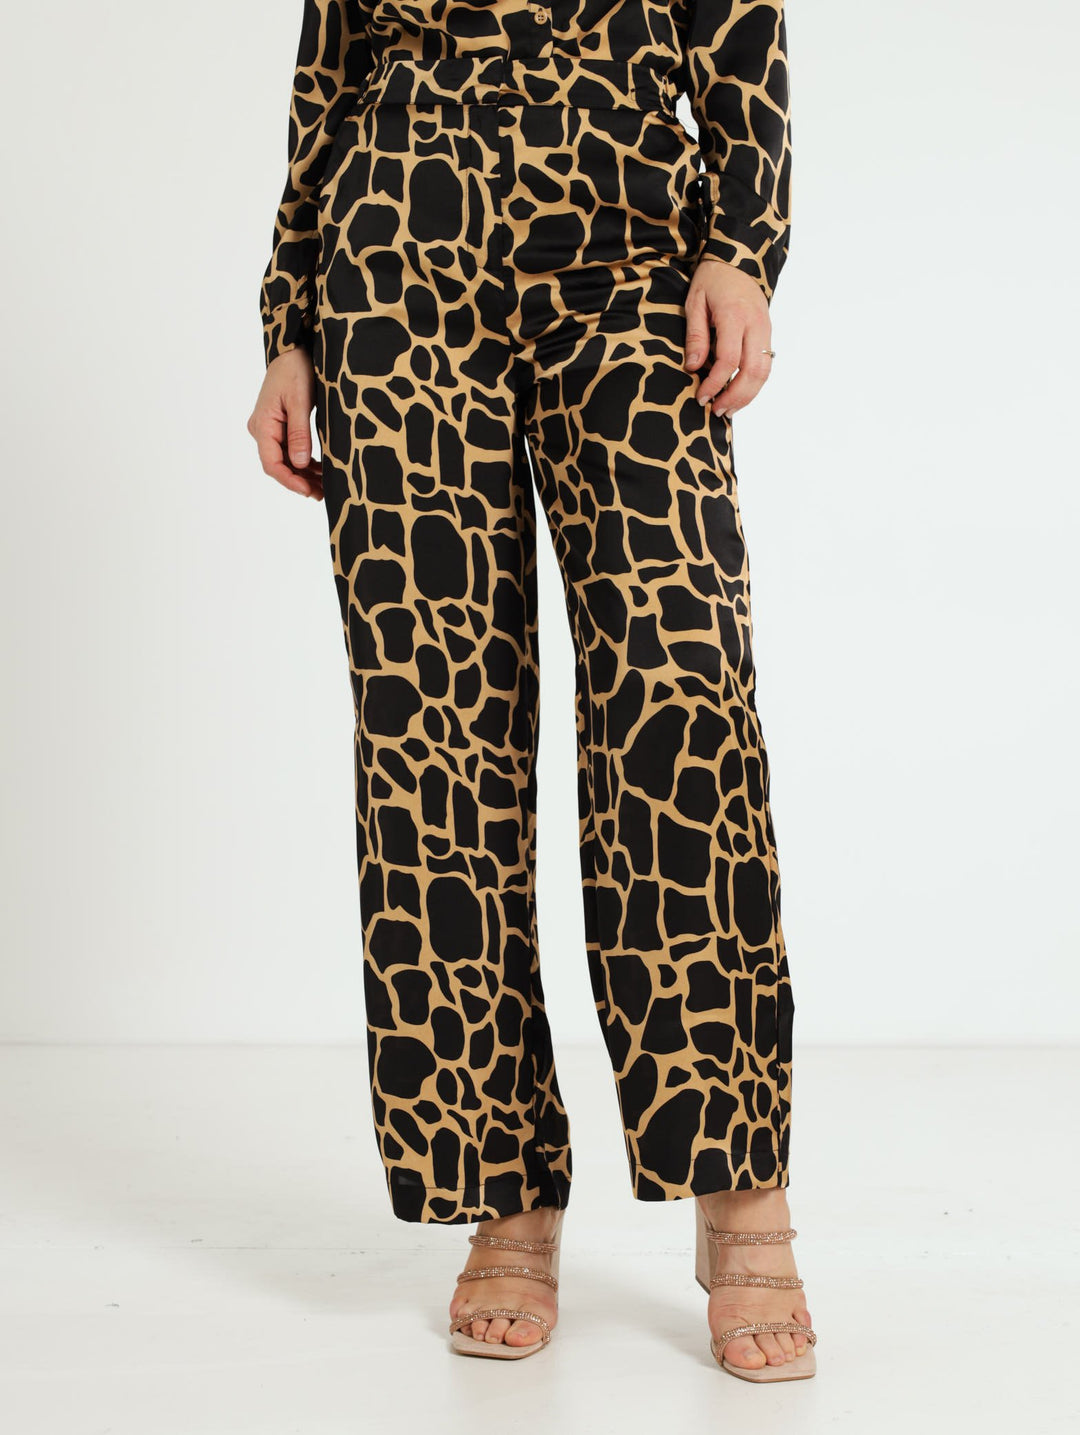 Satin Giraffe Print Wide Leg Pants - Black/Beige